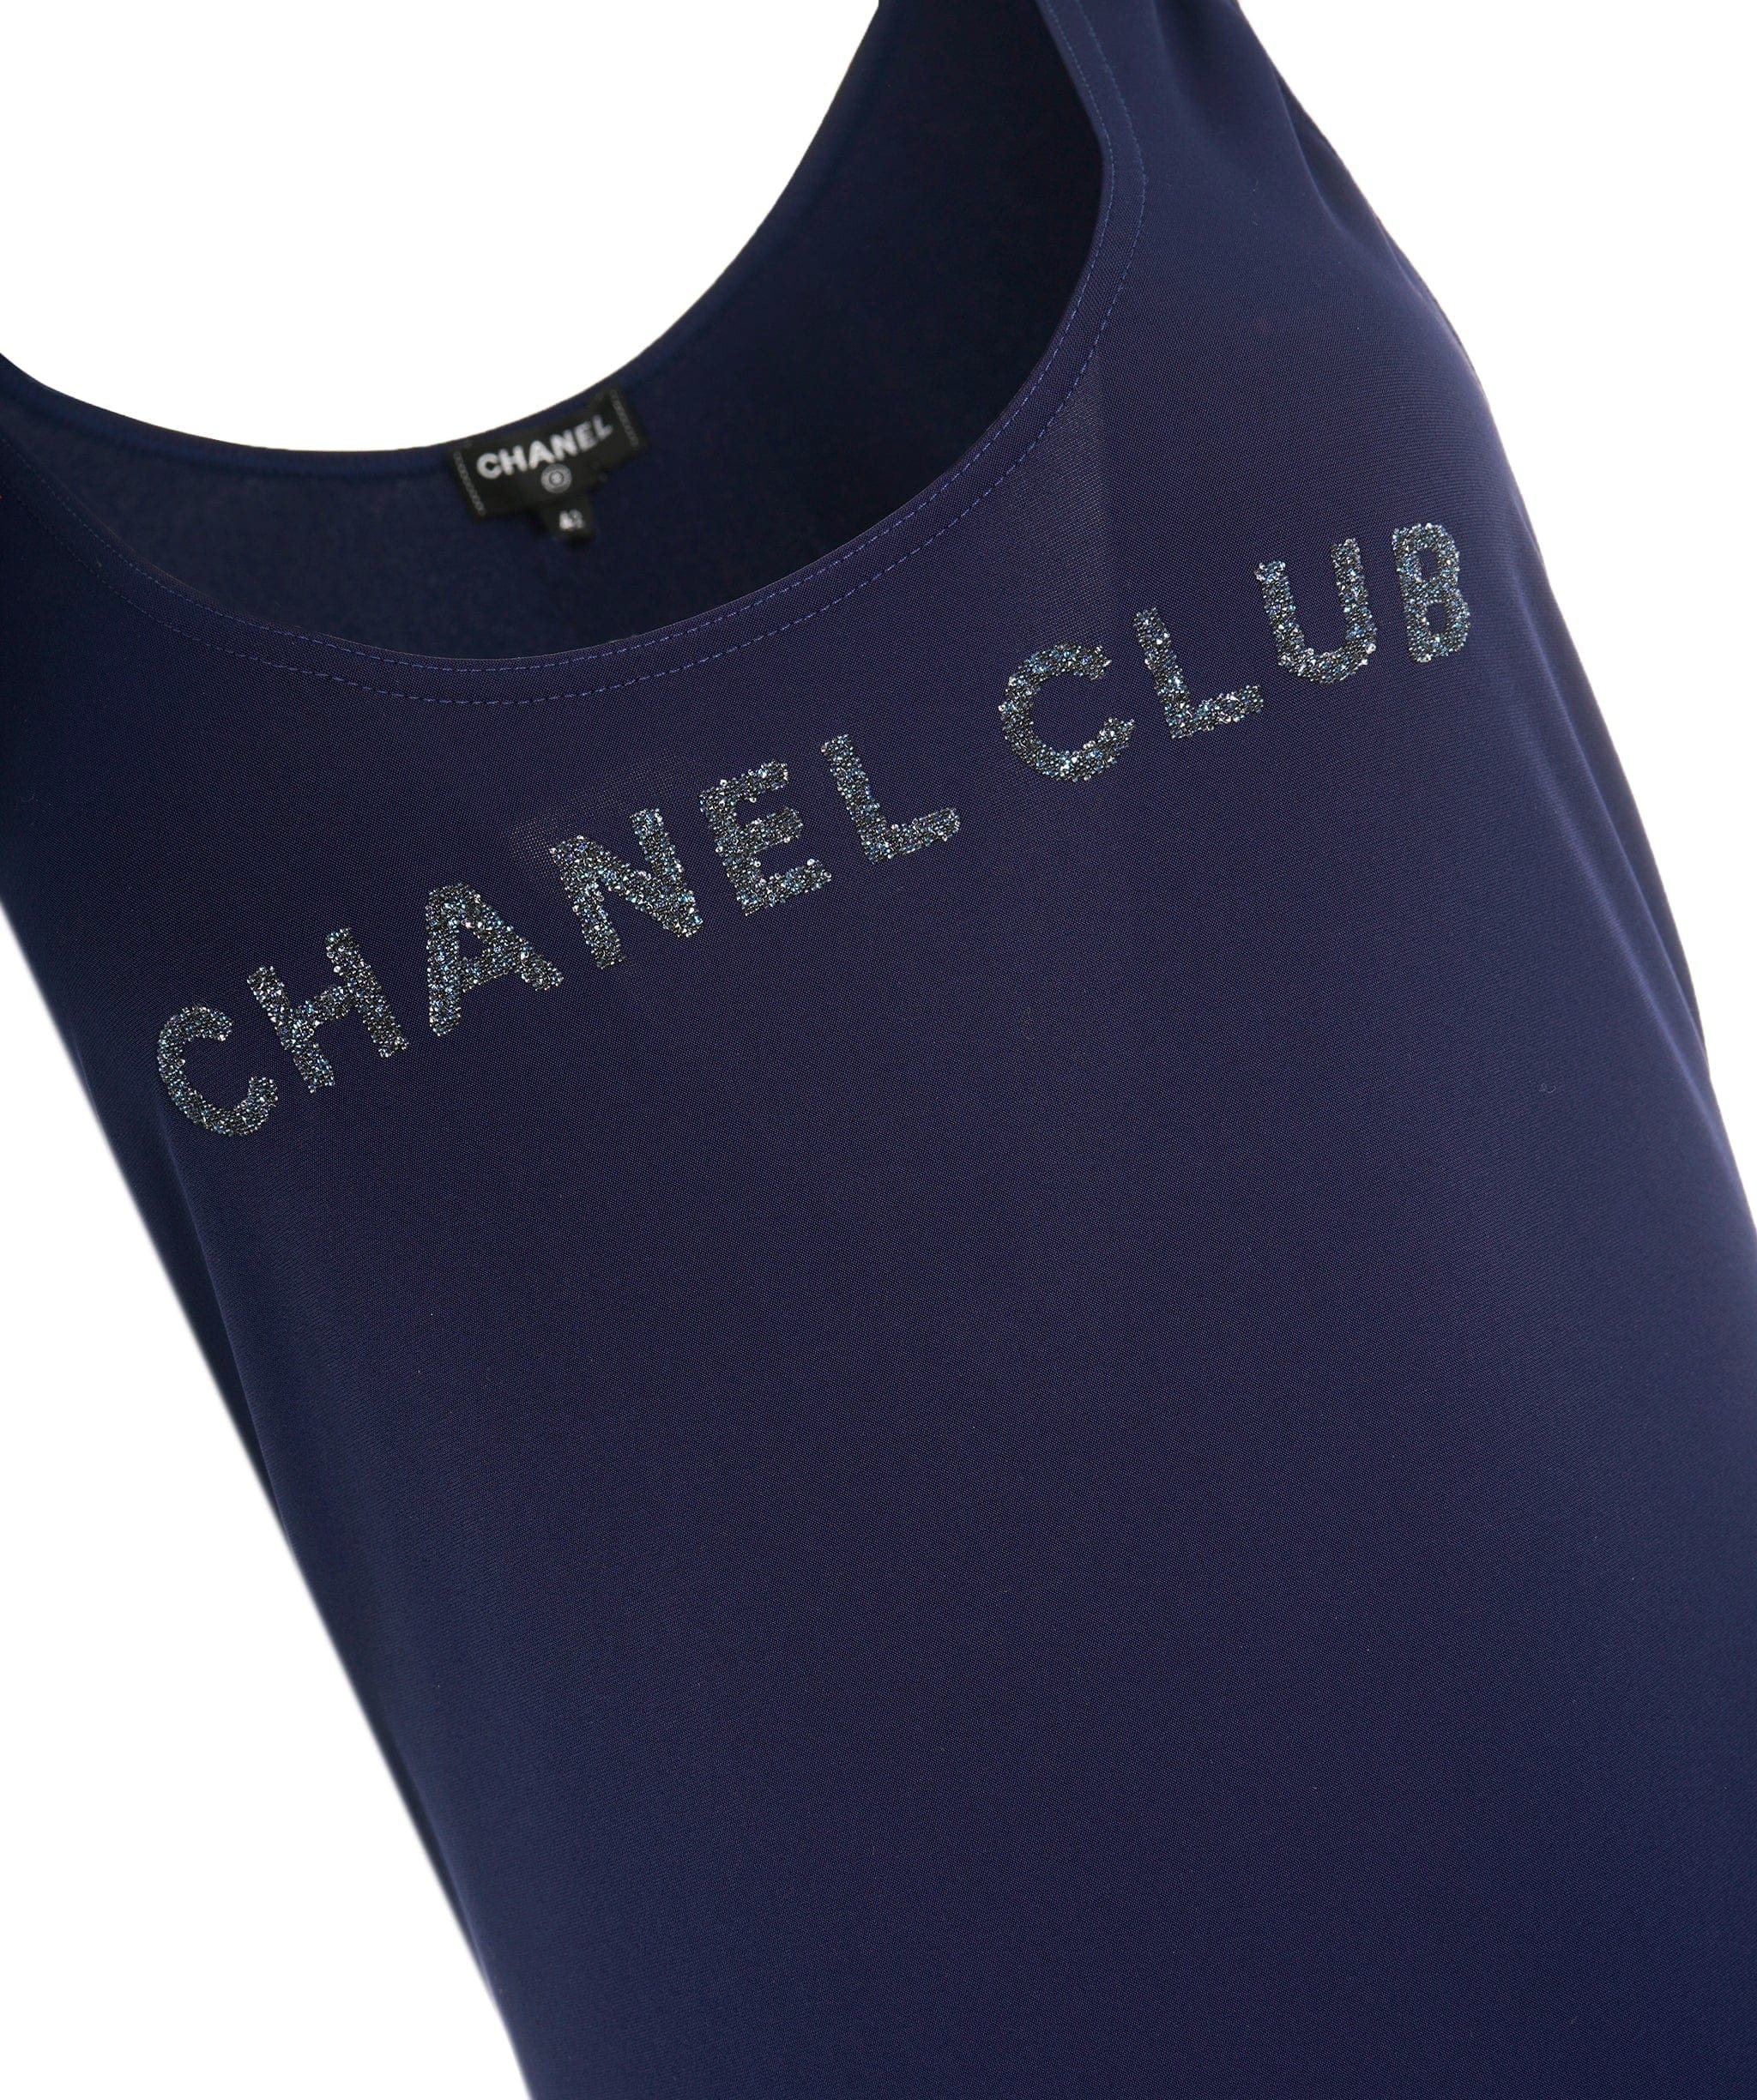 Chanel Chanel swimsuit 1pc Chanel club FR38 AVC1443